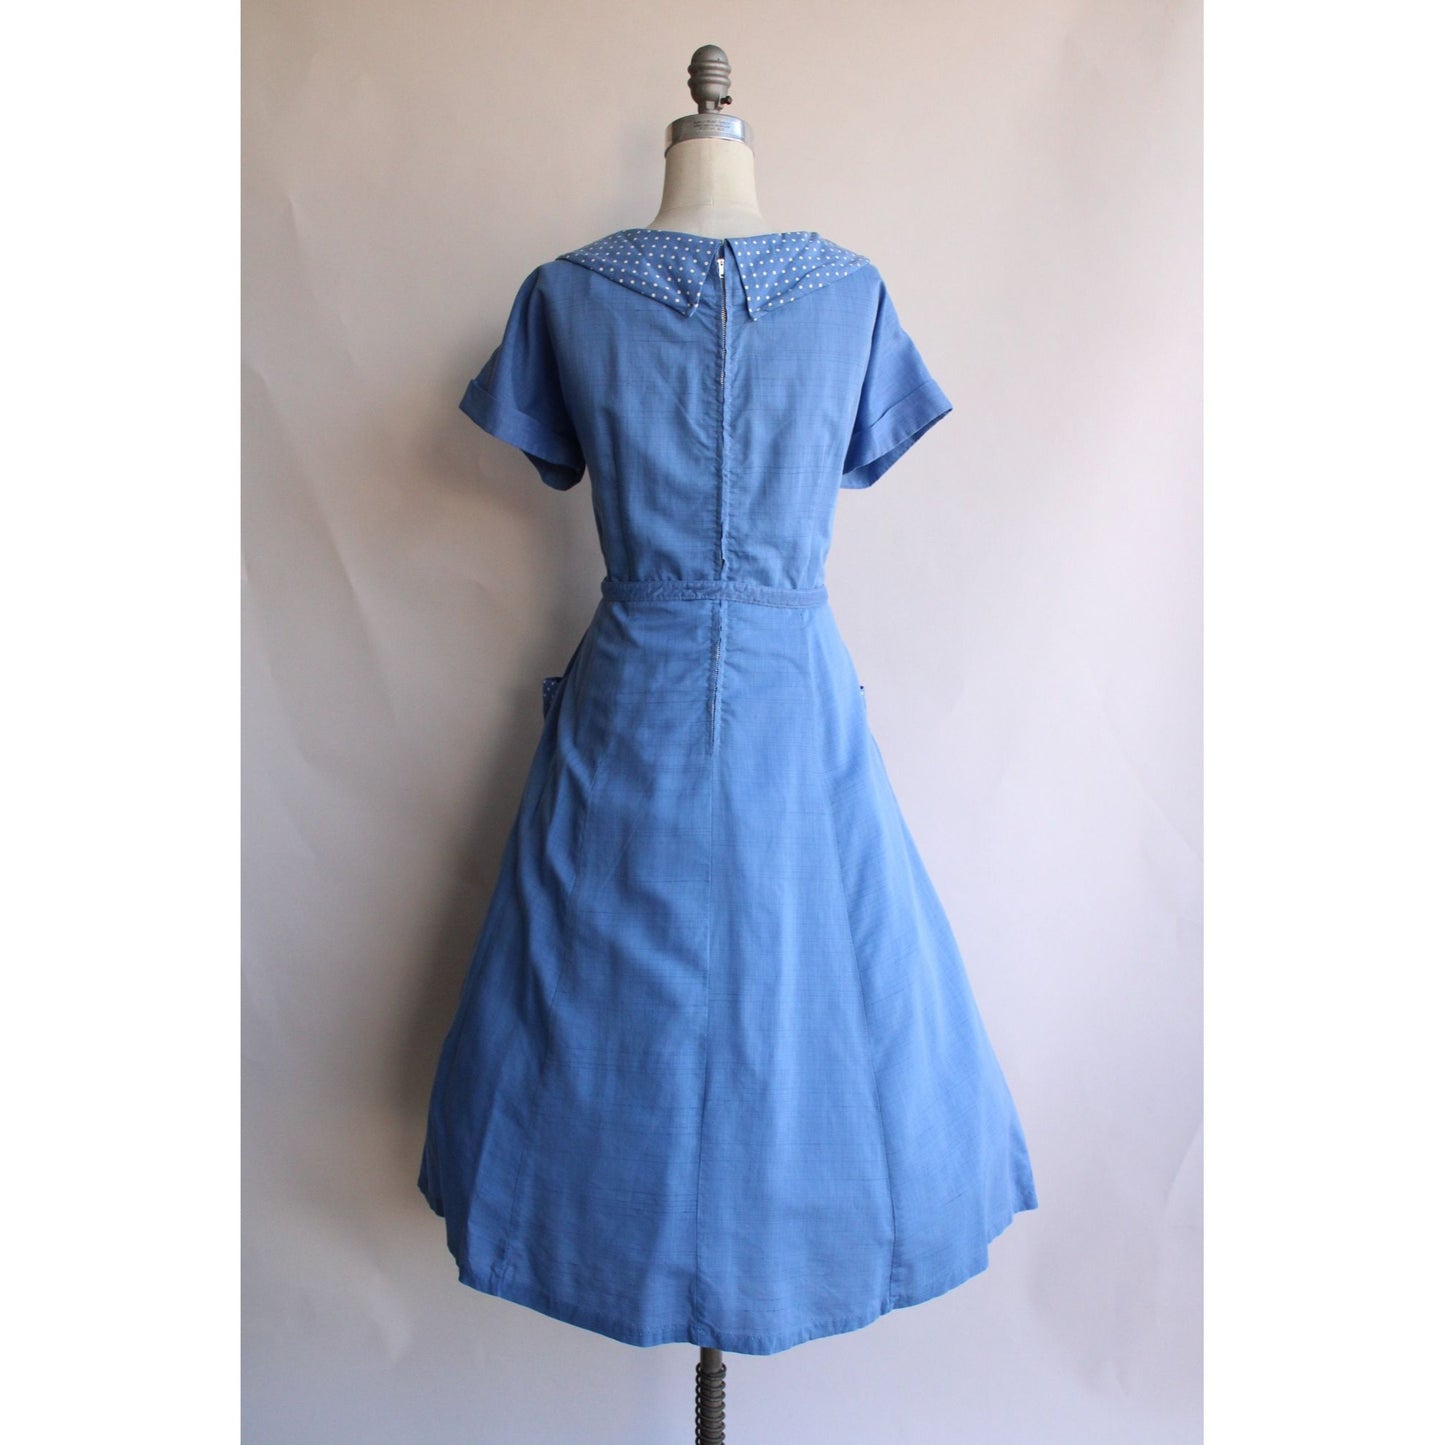 Vintage 1950s Plus Size Sky Blue Dress with Pockets and Belt